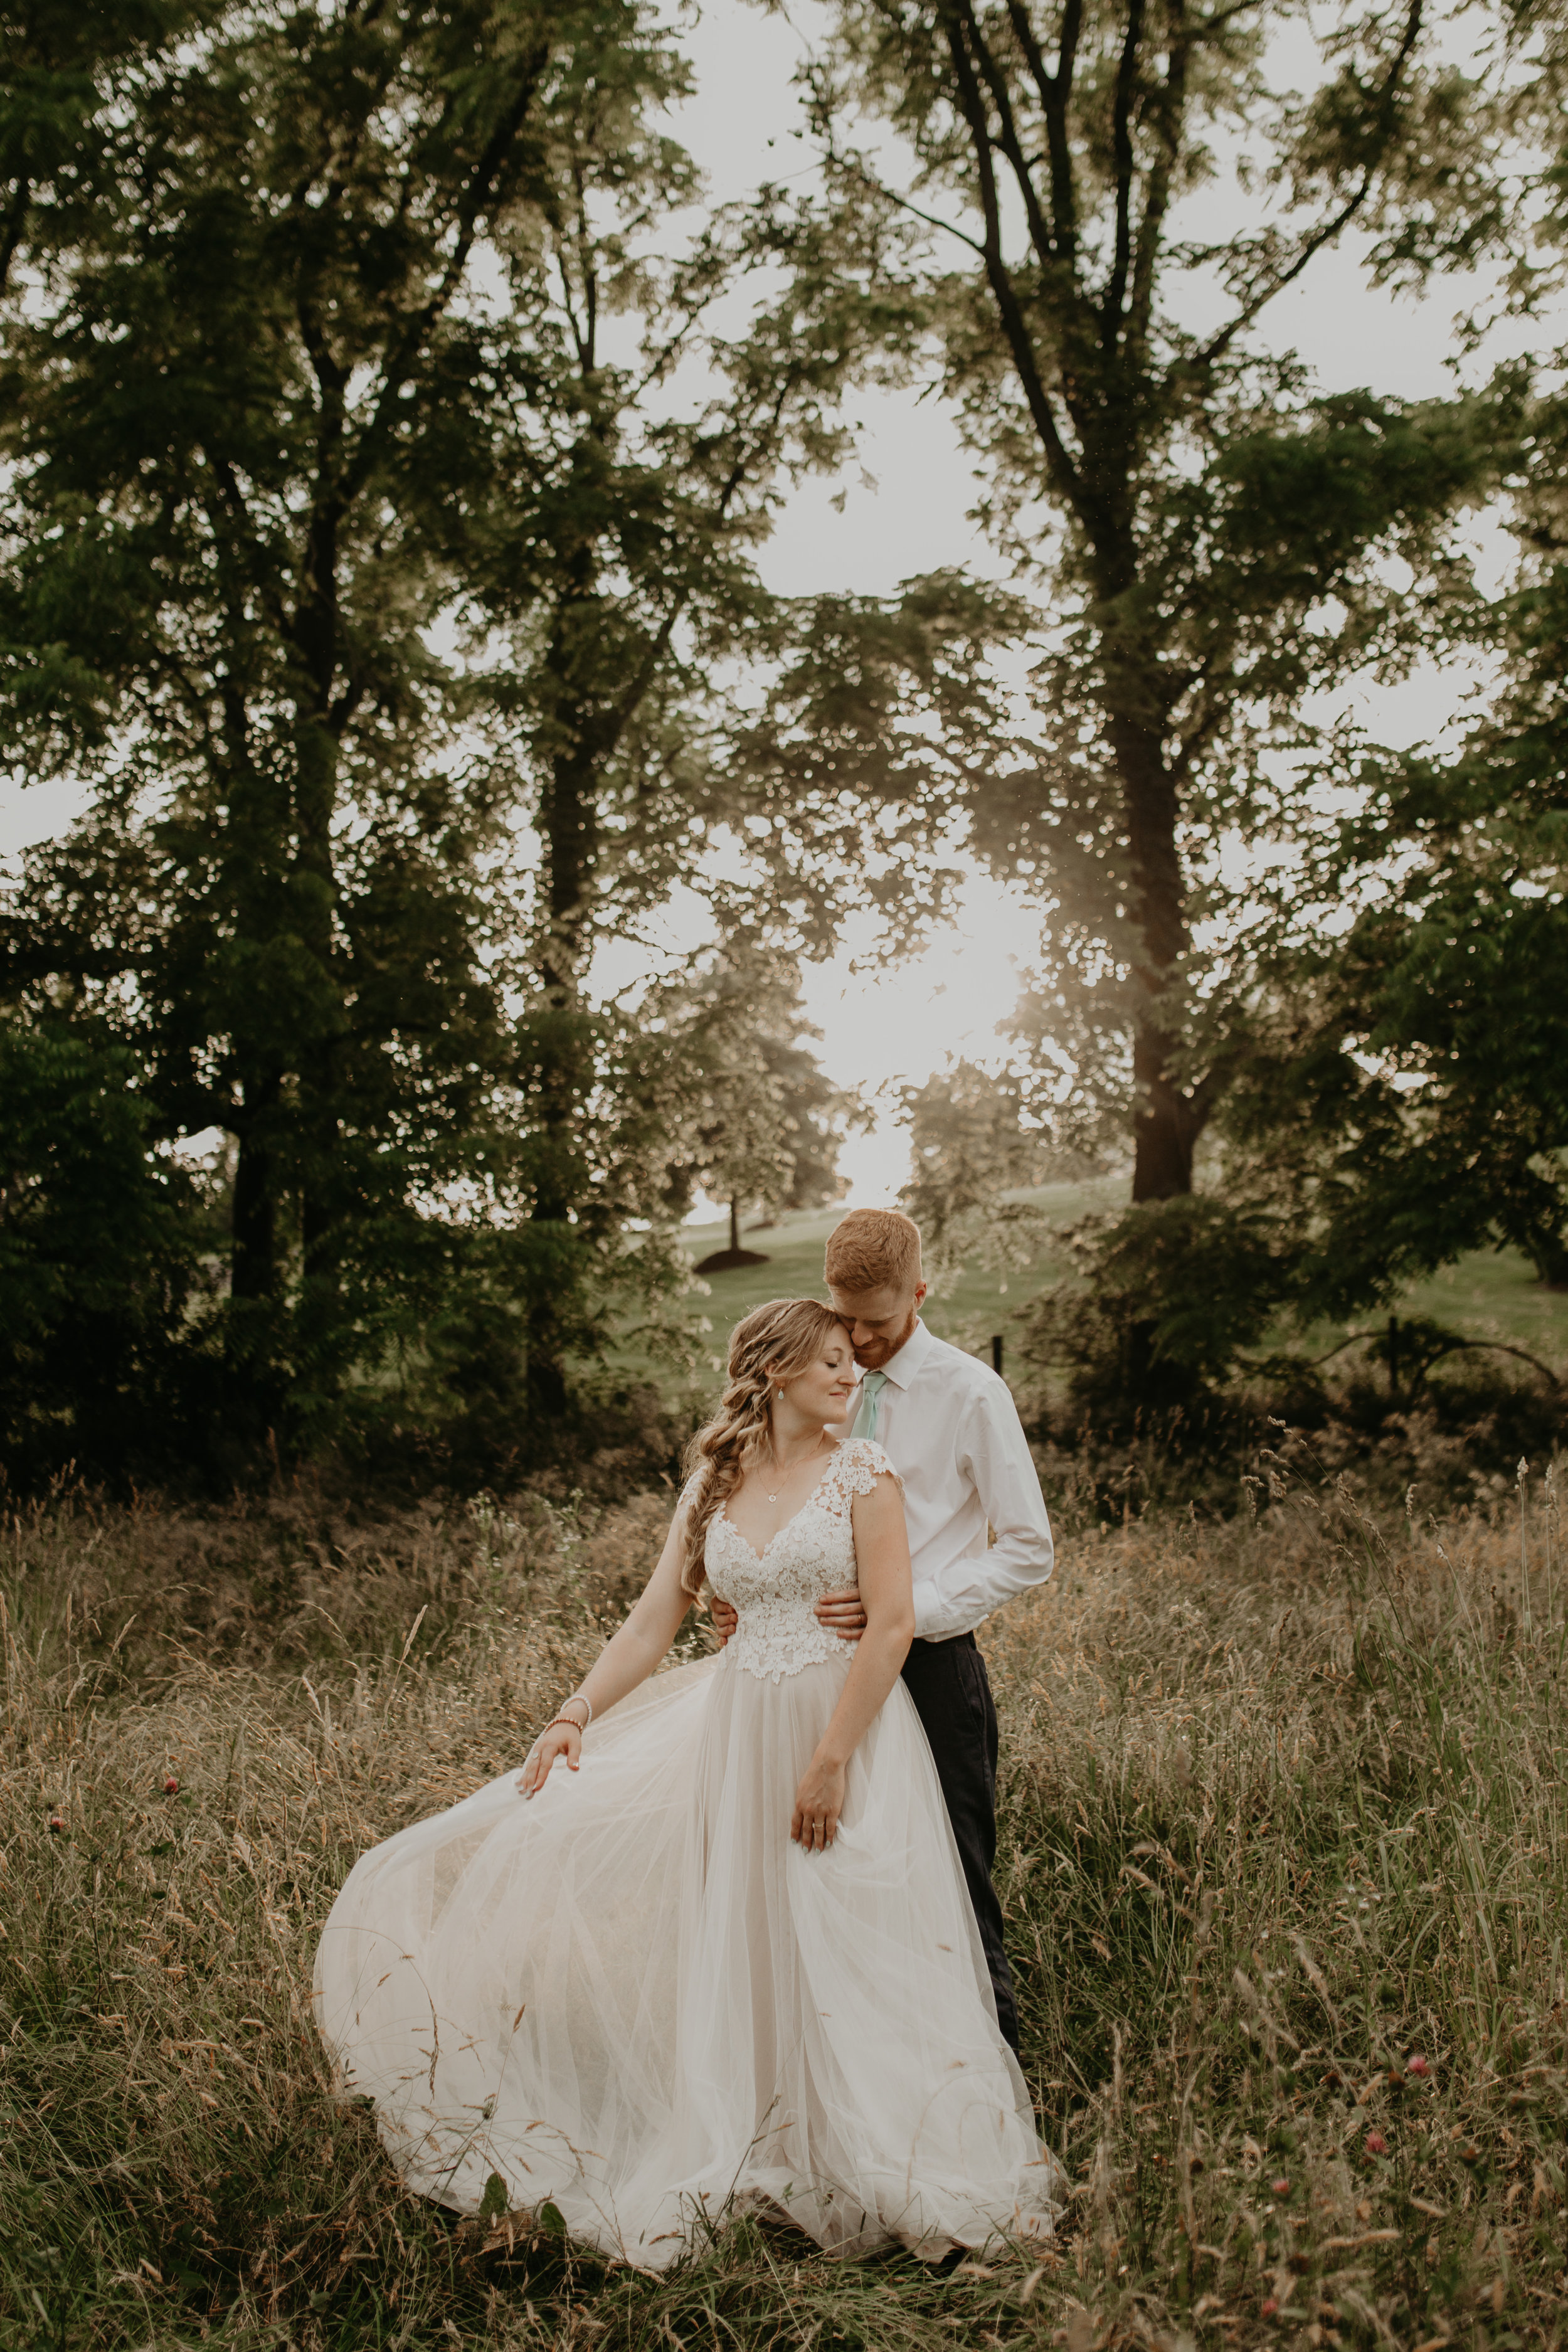 Nicole-Daacke-Photography-pennsylvania-laid-back-outside-backyard-wedding-family-summer-june-maryland-barefoot-bride-woodland-trees-sunset-couple-79.jpg